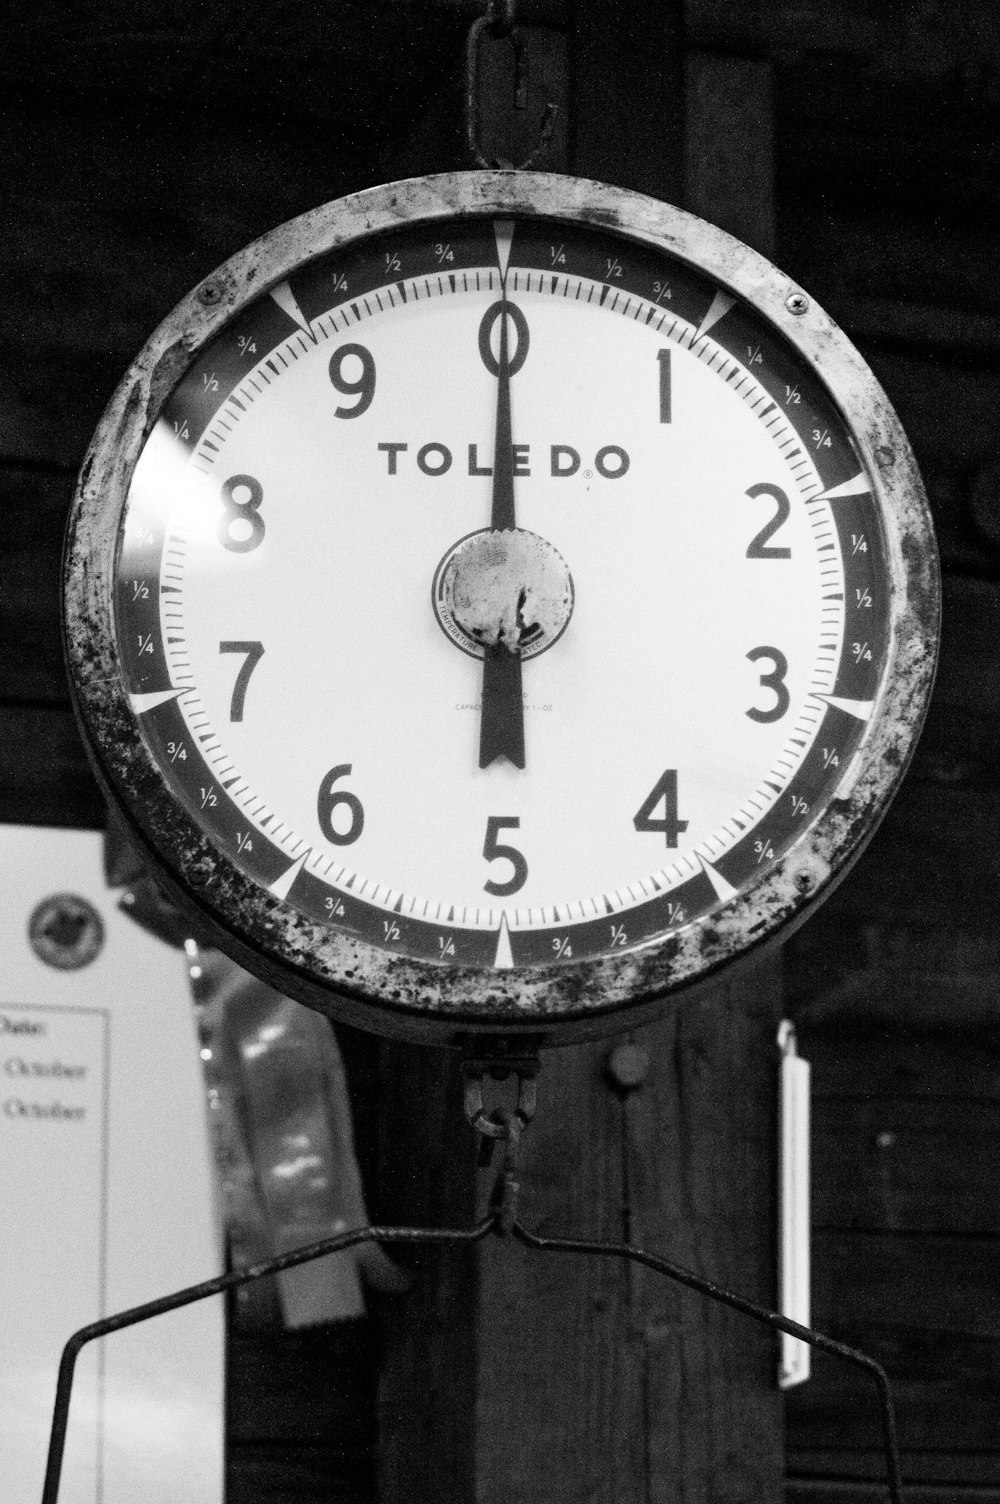 round Toledo analog clock